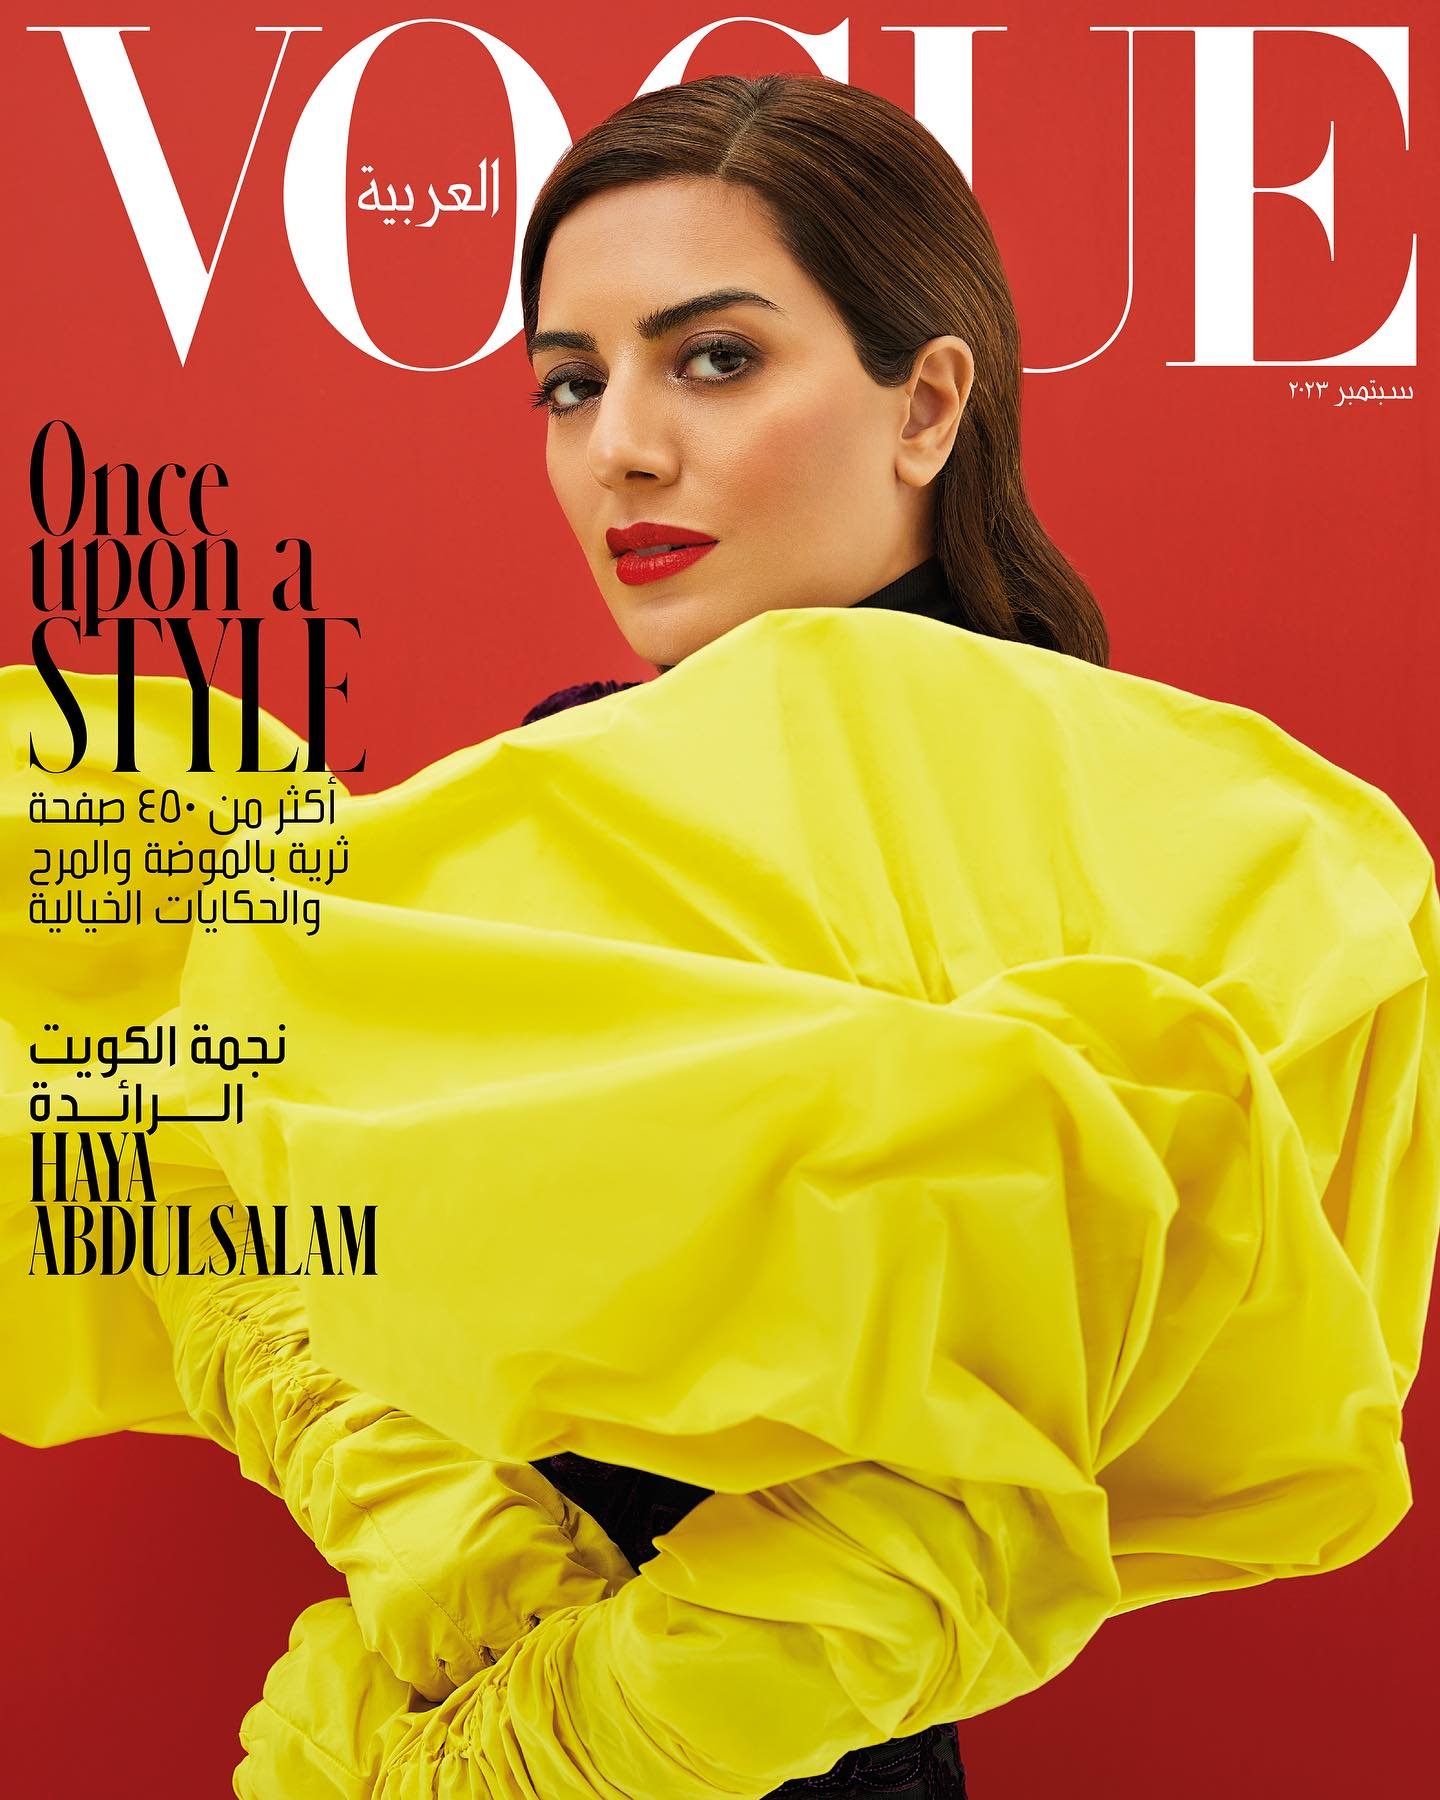 Vogue Launches Vogue On Designers Book Series, British Vogue